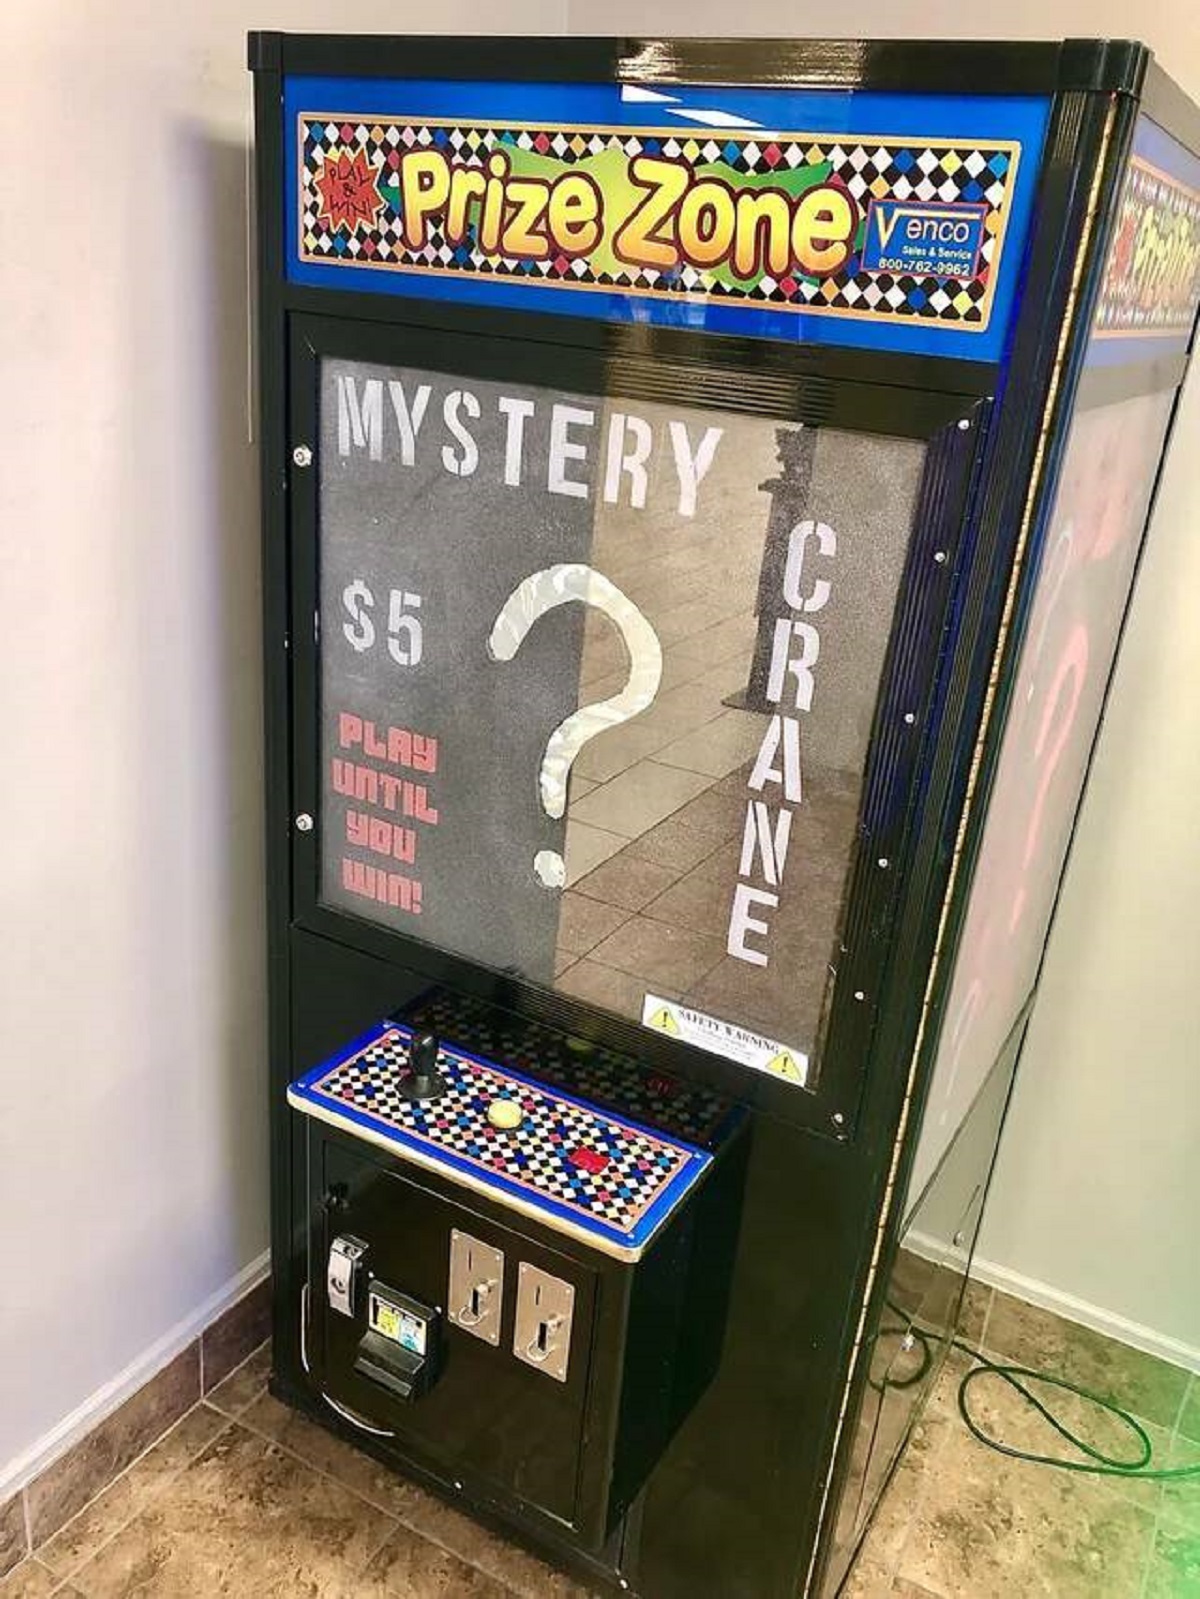 video game arcade cabinet - Prize Zone Mystery $5 Play Holl Hanrin Crane enco